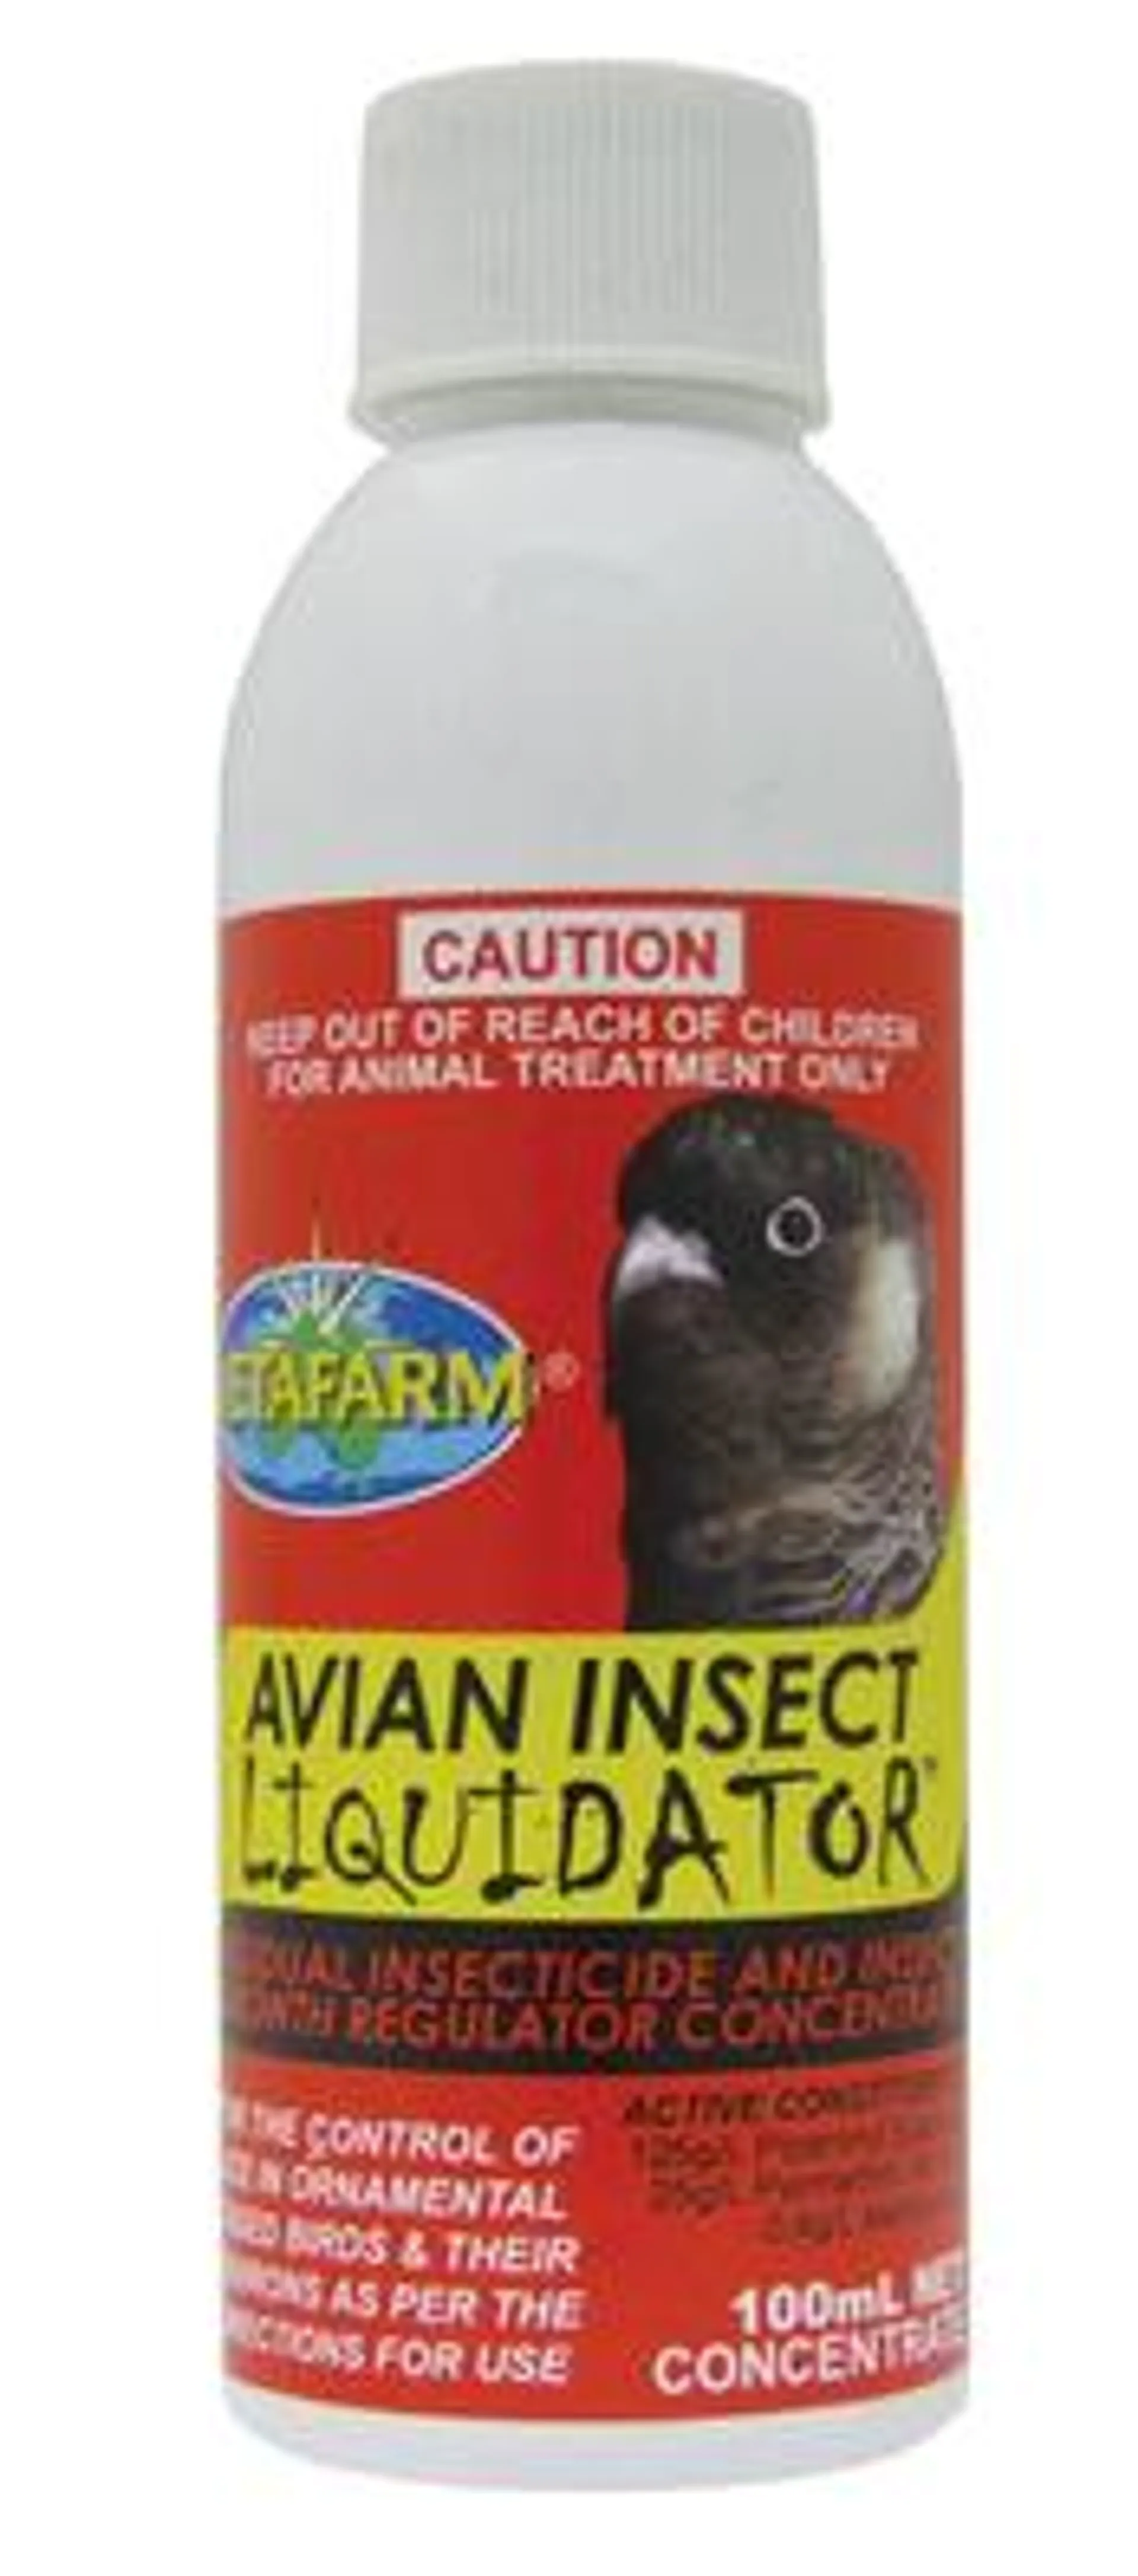 Vetaform Avian Insect Liquidator